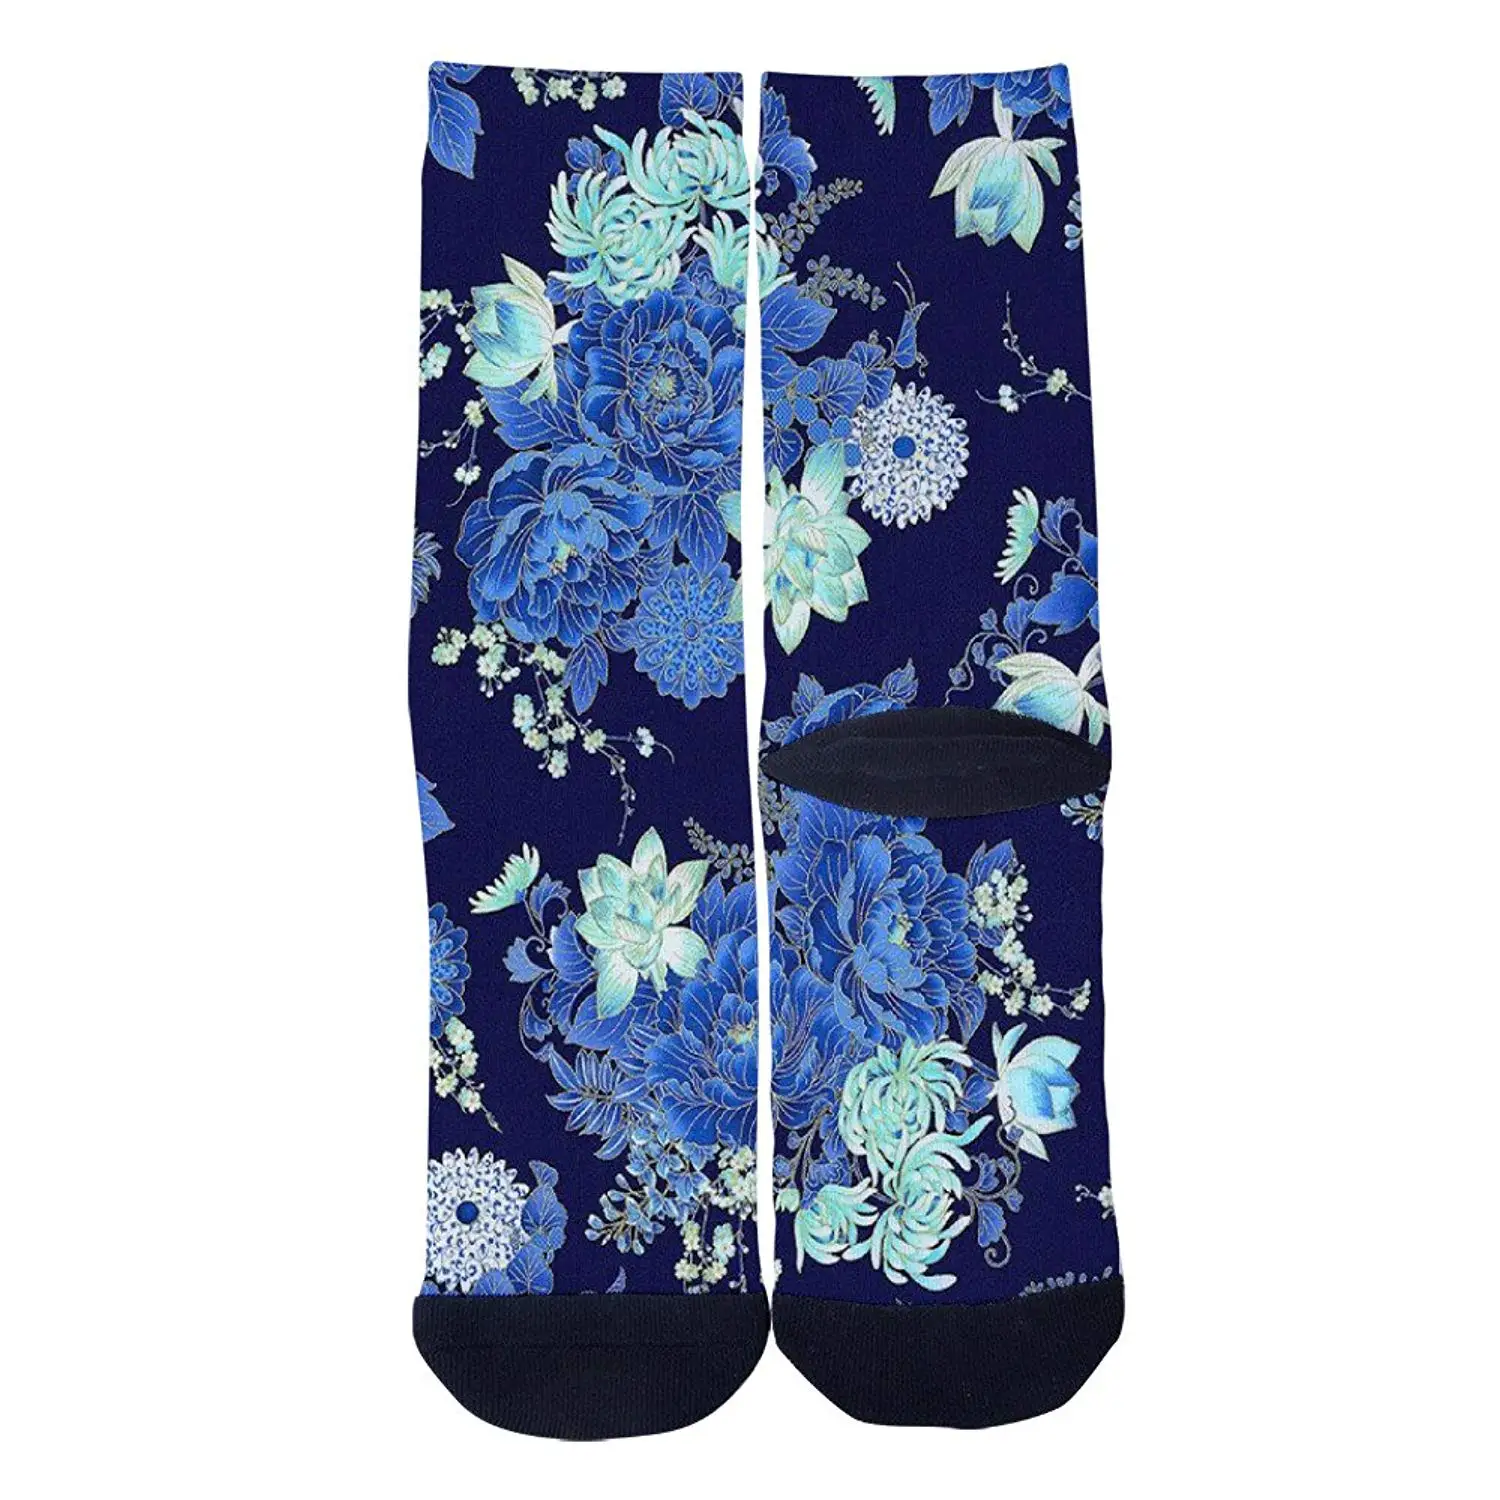 mens floral dress socks